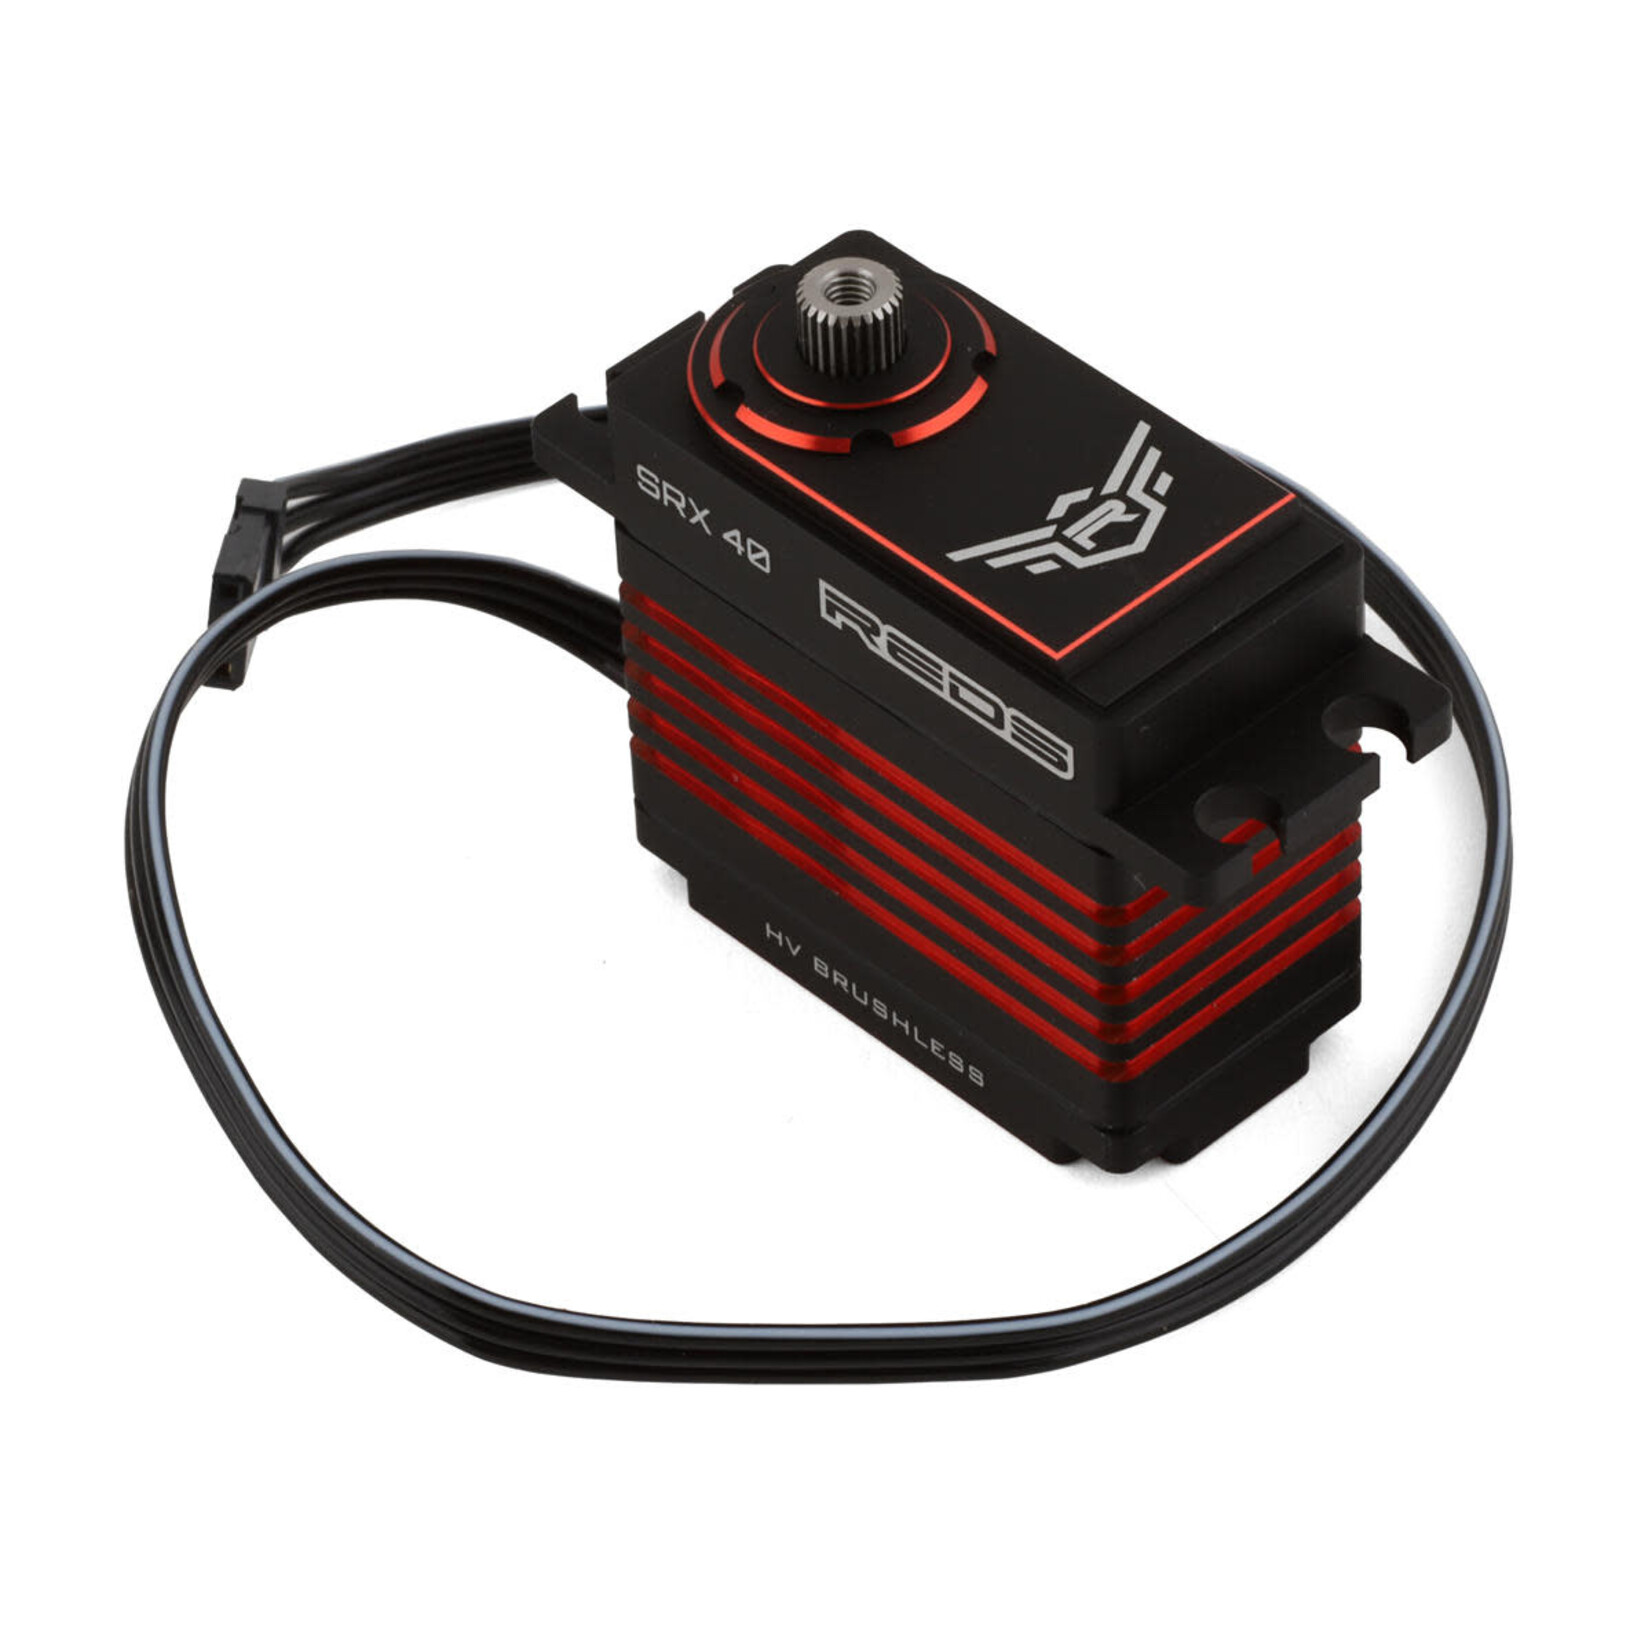 Reds REDS SRX 40 HV Digital Brushless Ultra High Torque Servo (6V-8.4V) #SRVC0004